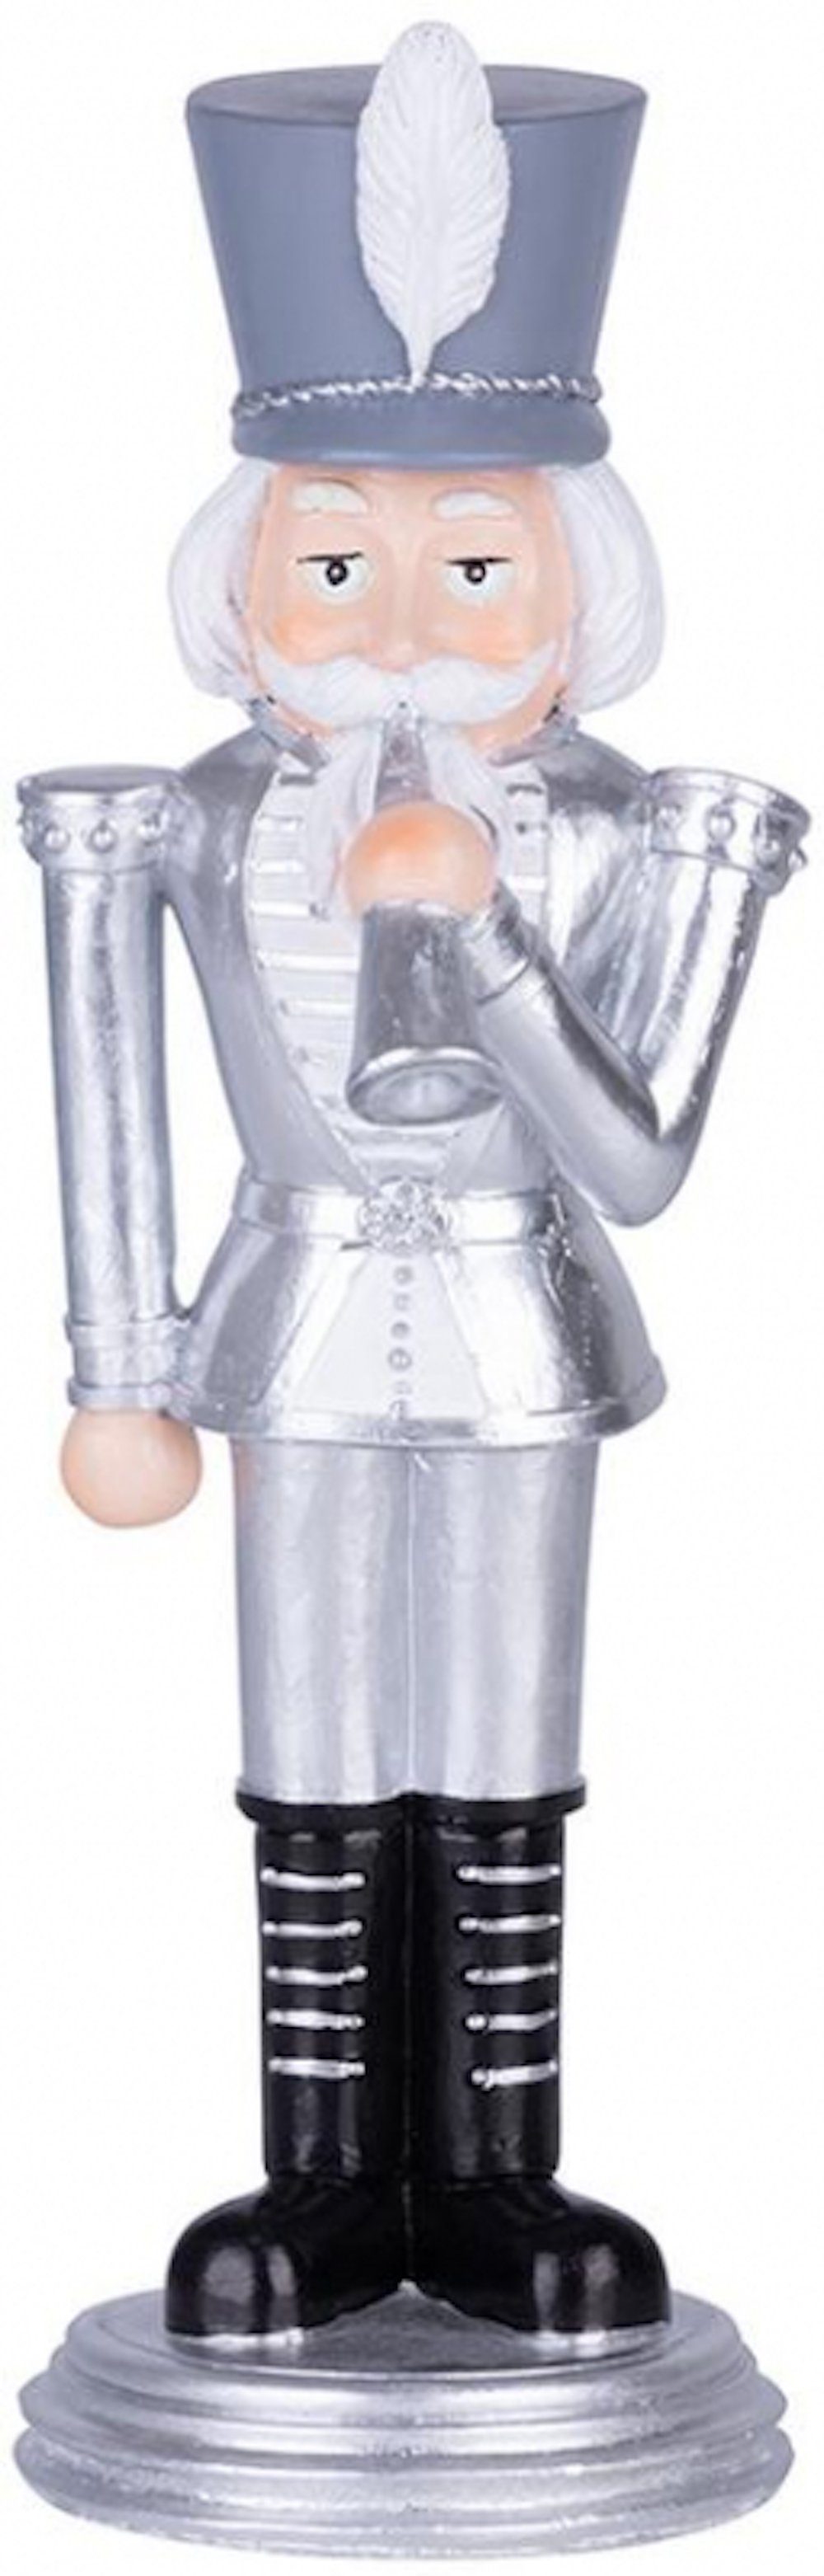 Figur Dekofigur Vielseitig König Nussknacker 30cm hoch, eleganter Dekofigur/Nussknacker, einsetzbar, PROREGAL® MagicHome silber/weiß